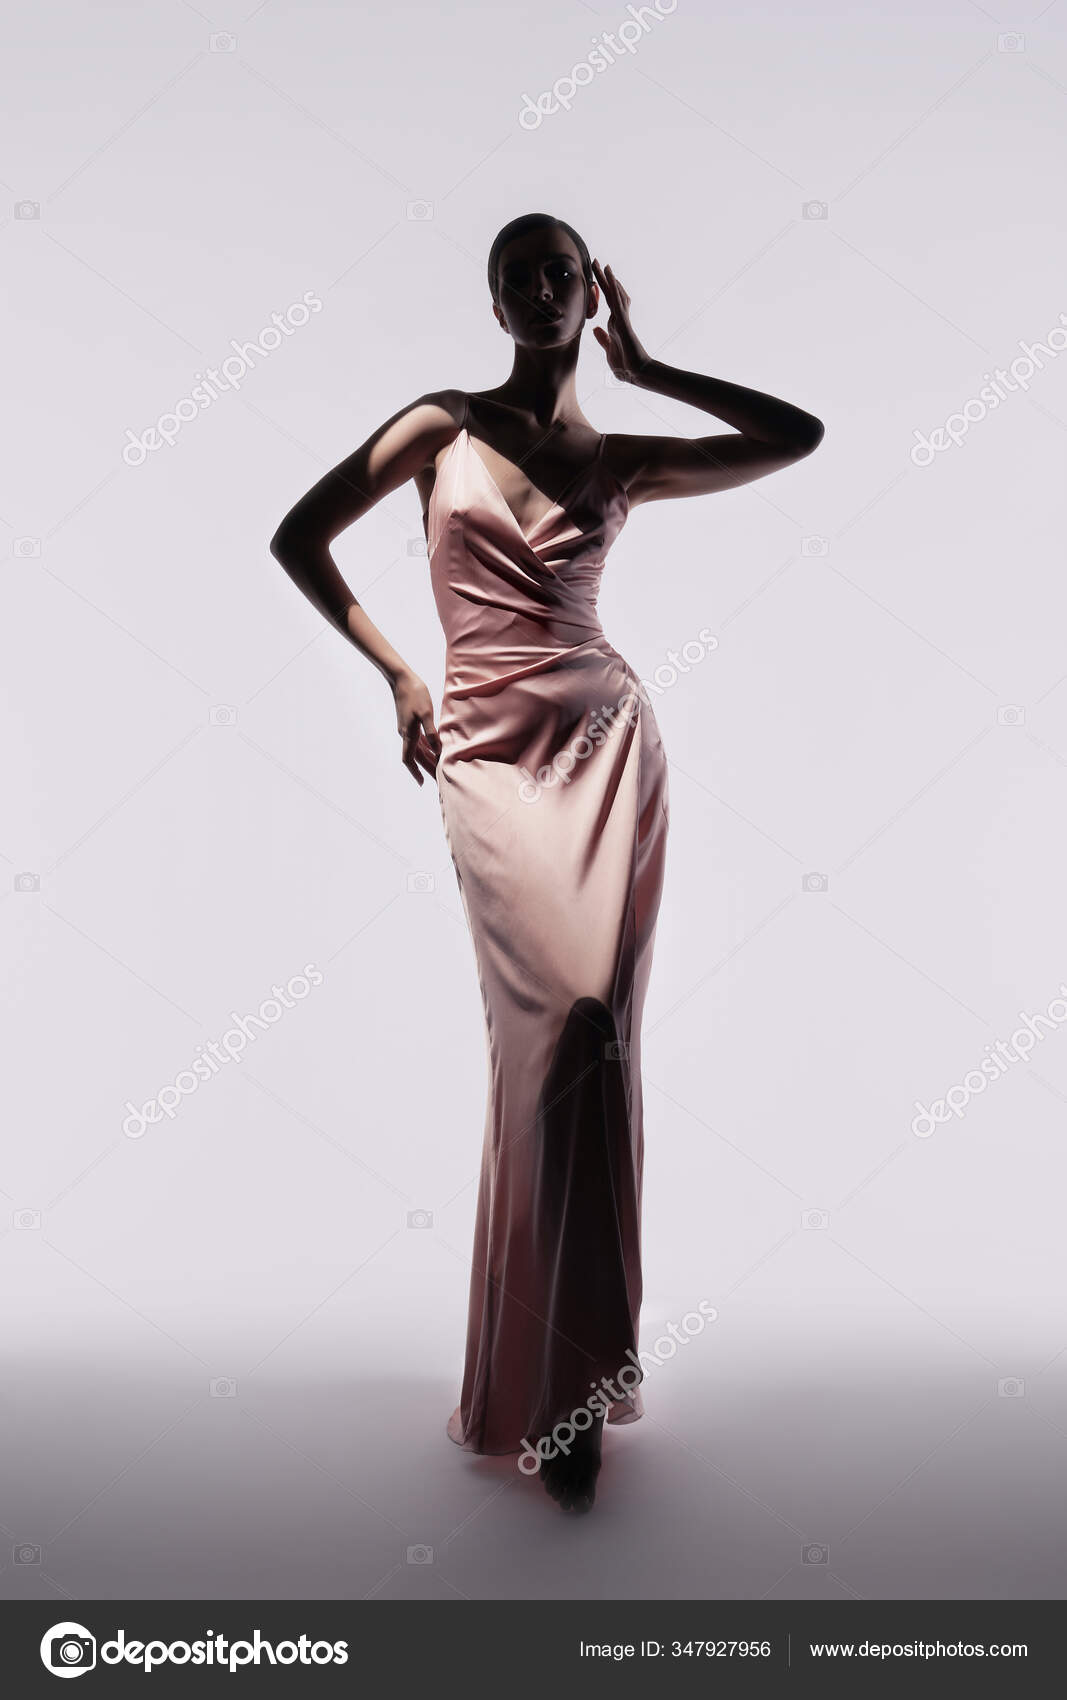 Elegant Girl Posing In Trendy Burgundy Suit Free Stock Photo and Image  315882592